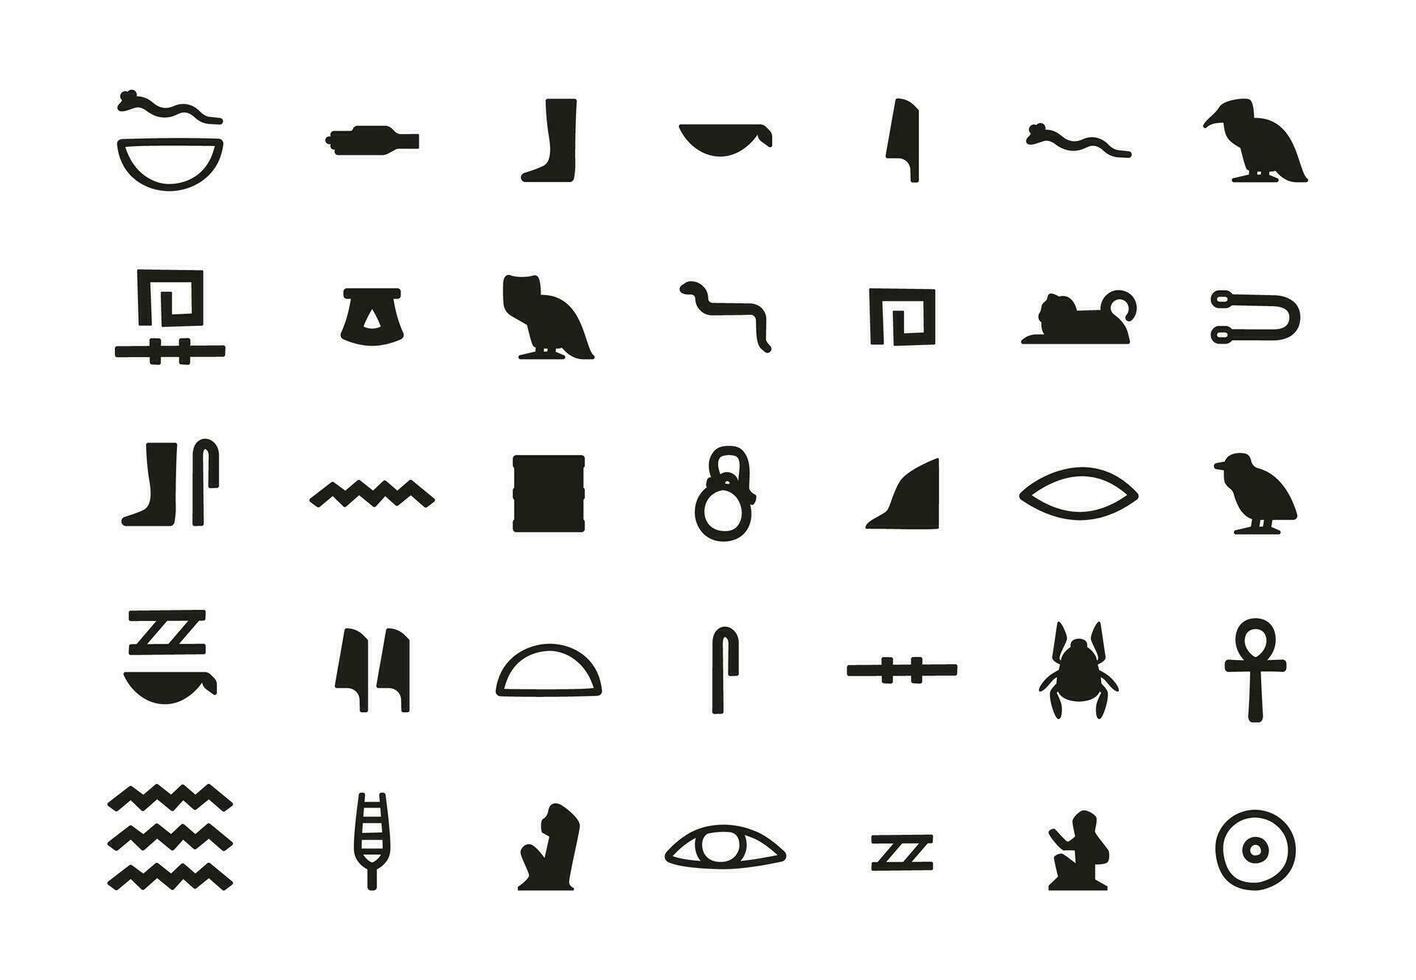 Ancient hieroglyphic symbols. Egyptian hieroglyph signs, old manuscript symbolic inscription decorative lettering Egypt history concept. Vector set